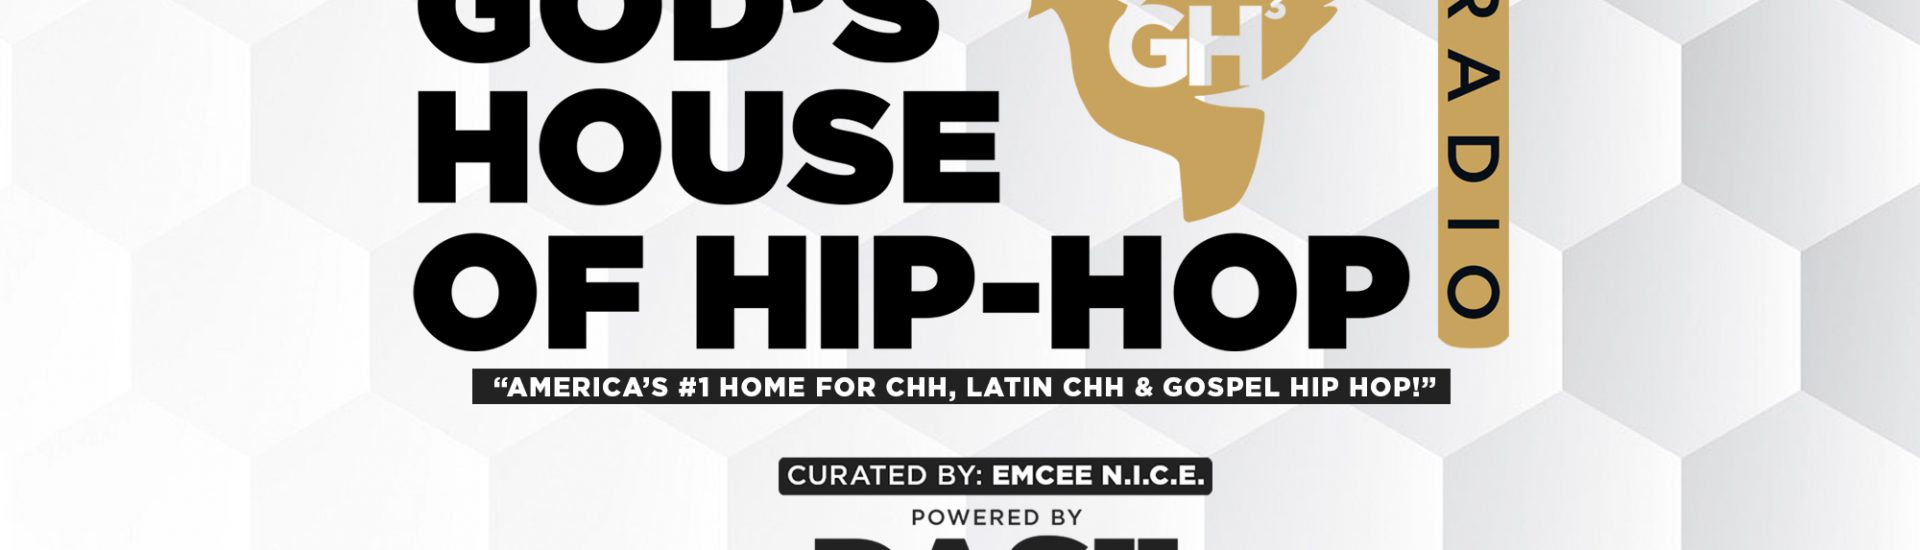 God's House of Hip Hop